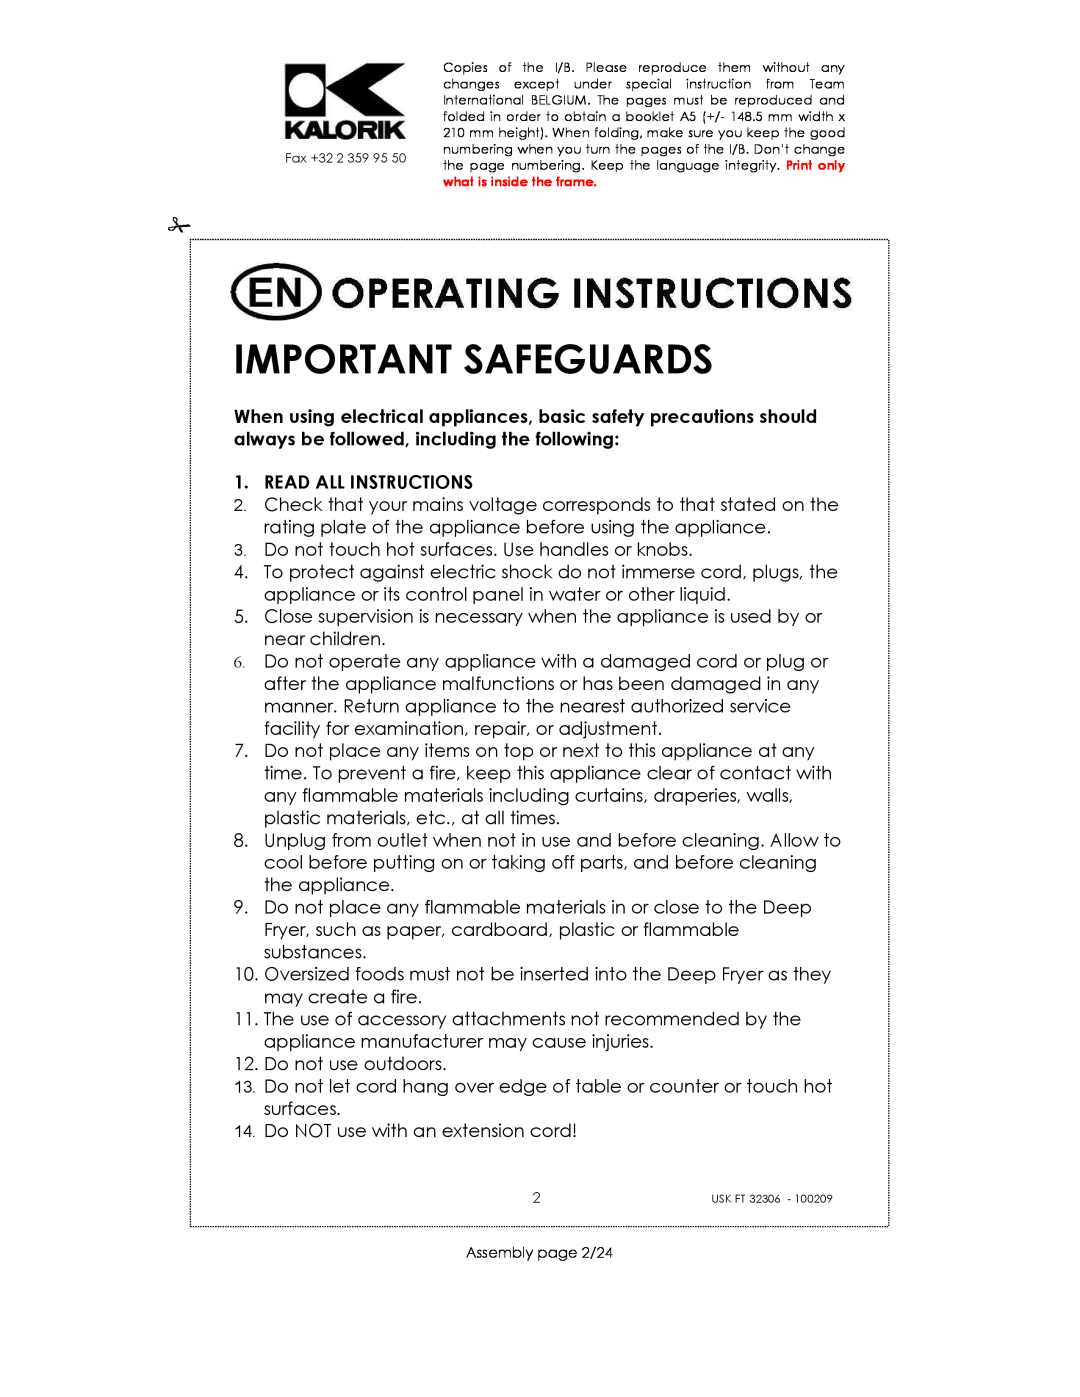 Kalorik USK FT 32306 manual Important Safeguards, Read All Instructions 